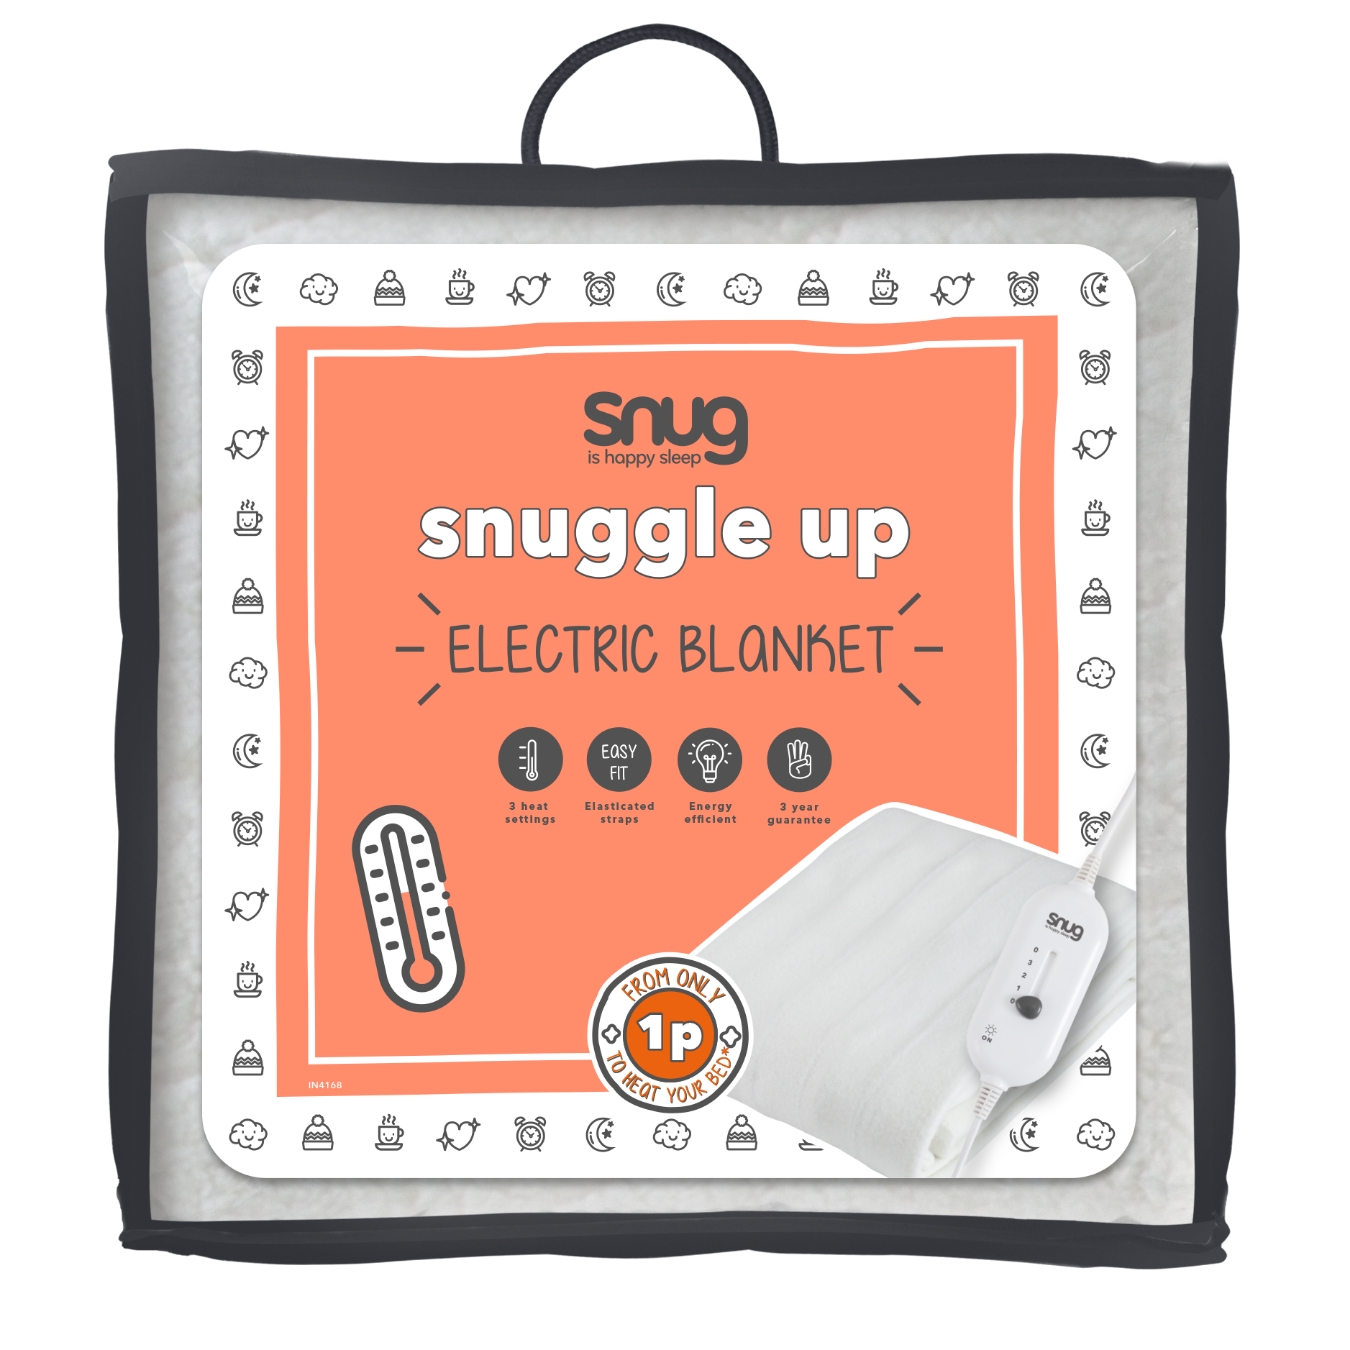 View Snug Snuggle Up Electric Blanket King information